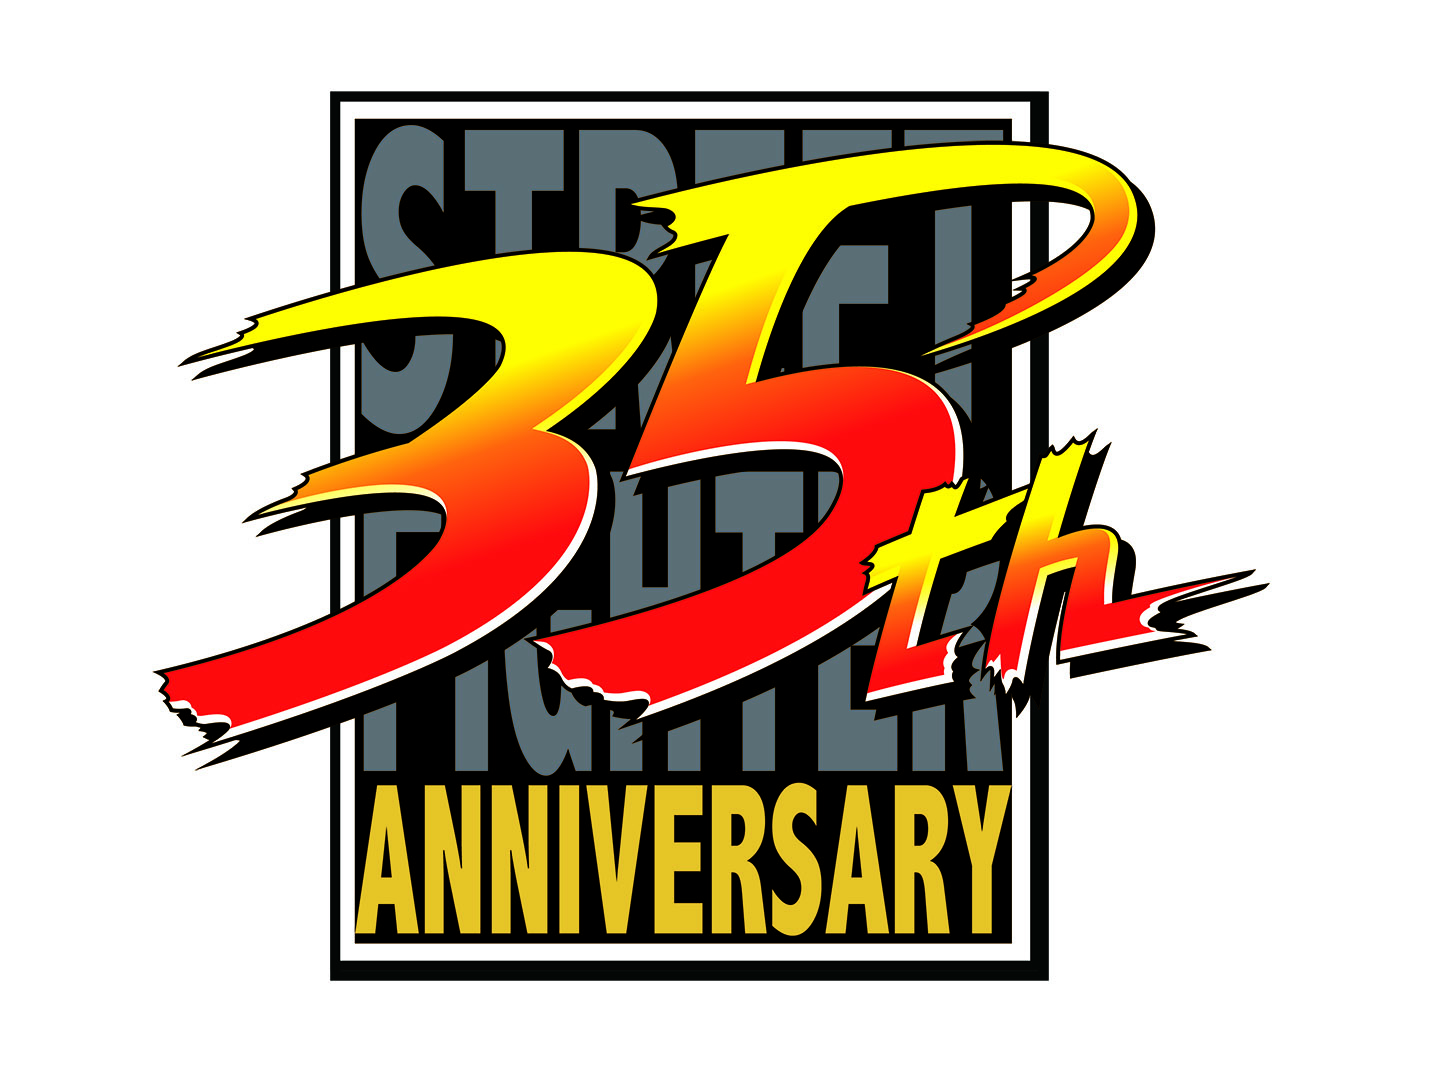 The new 35th anniversary logo